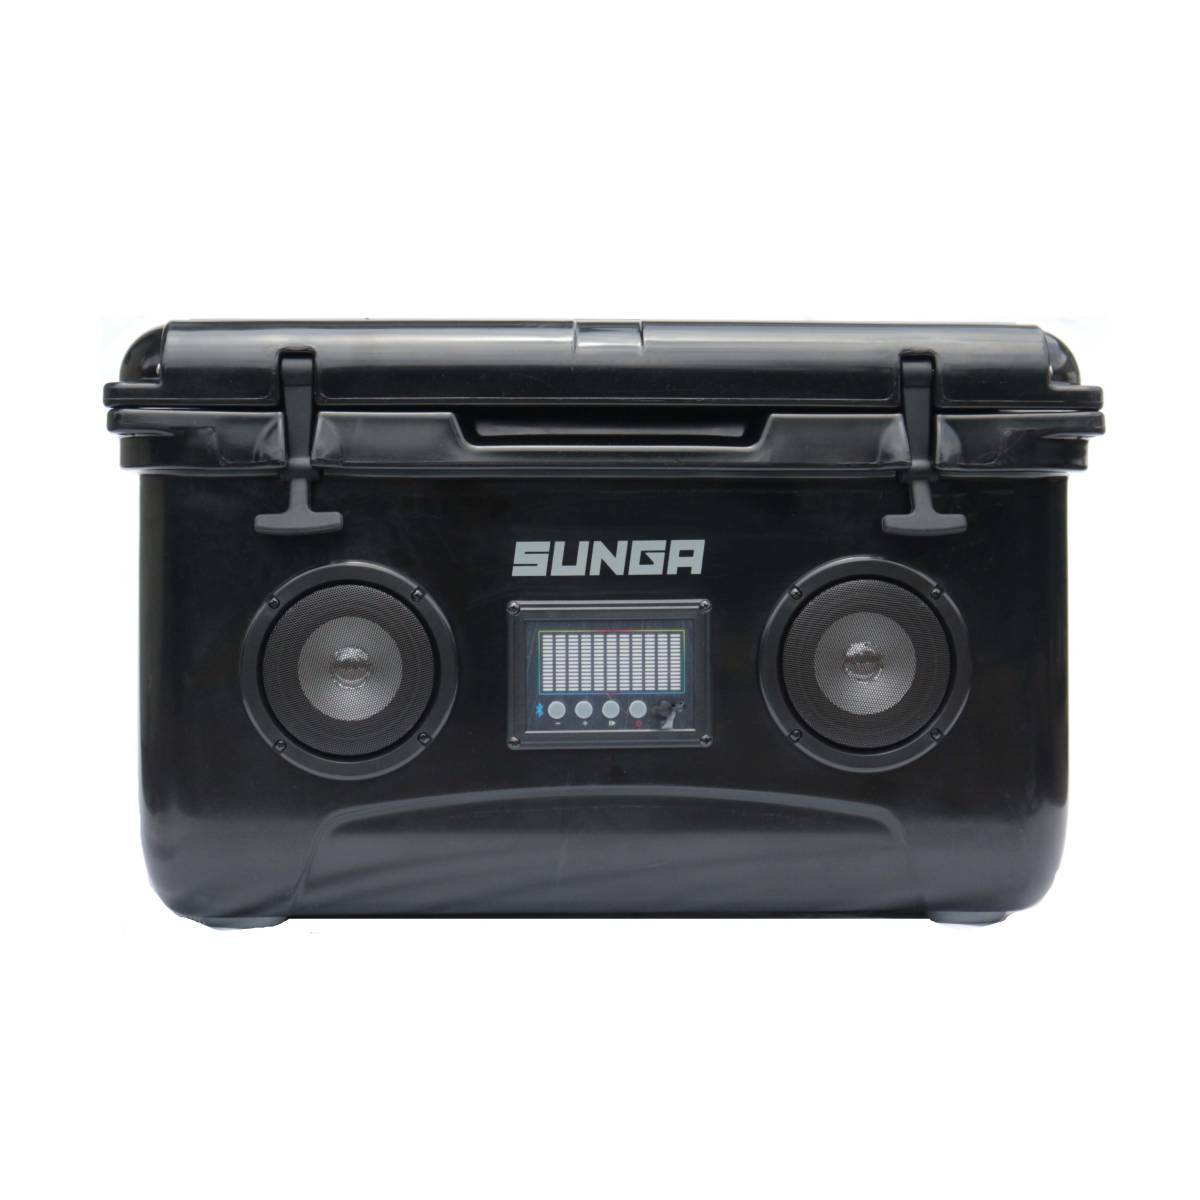 SUNGA クーラーボックス 45L Bluetooth スピーカー ブラック 大型 クーラーバッグ アウトドア キャンプ バーベキュー 黒